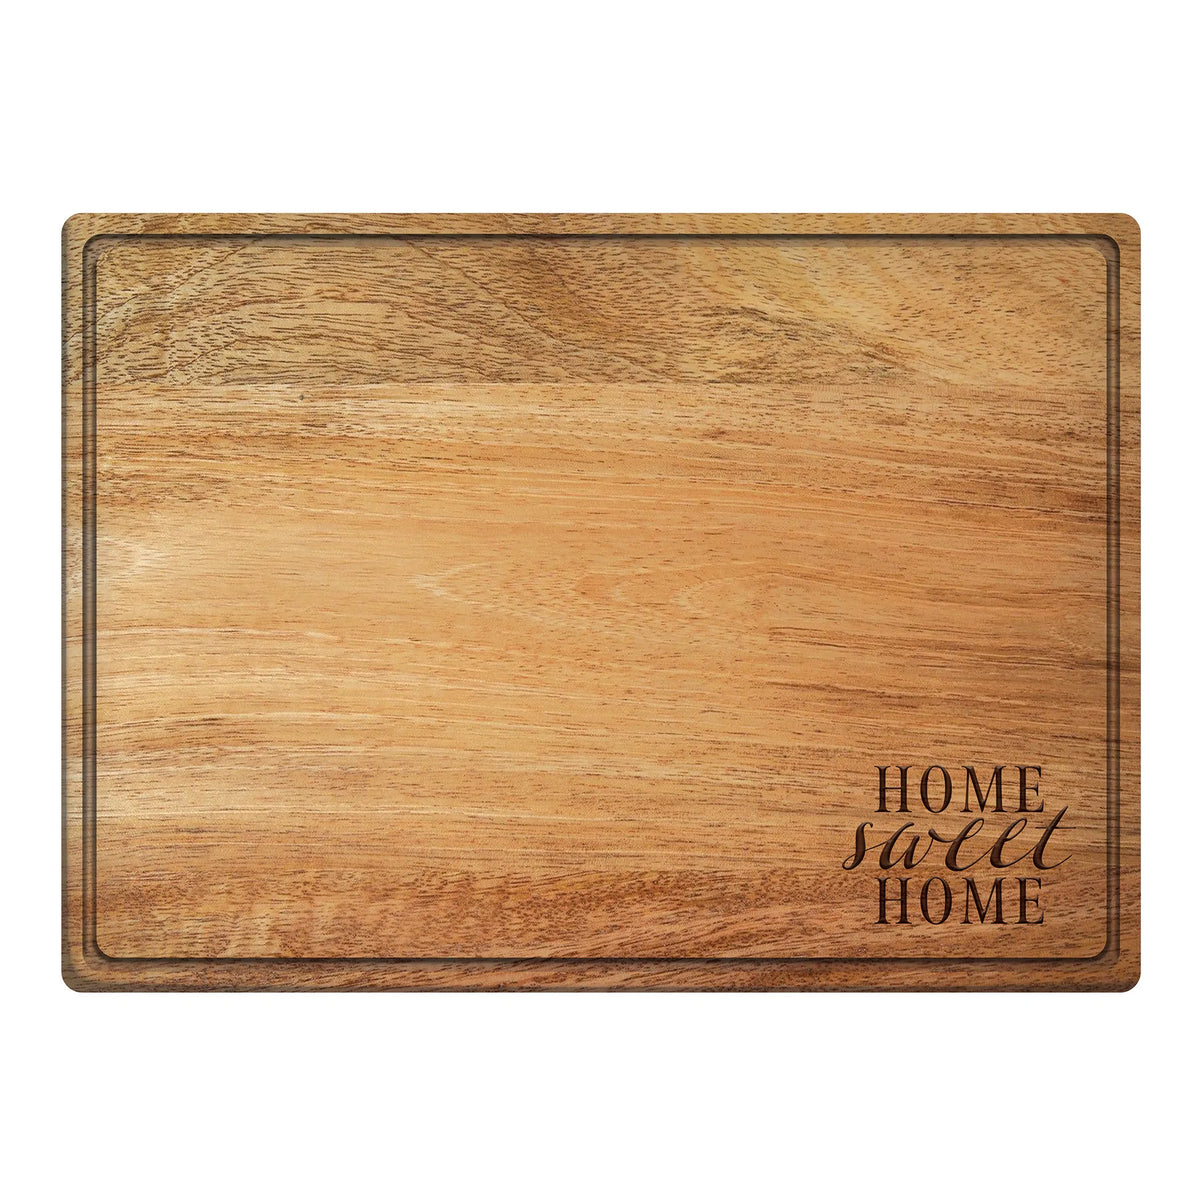 Home Sweet Home / Rectangular Wood Serving Board